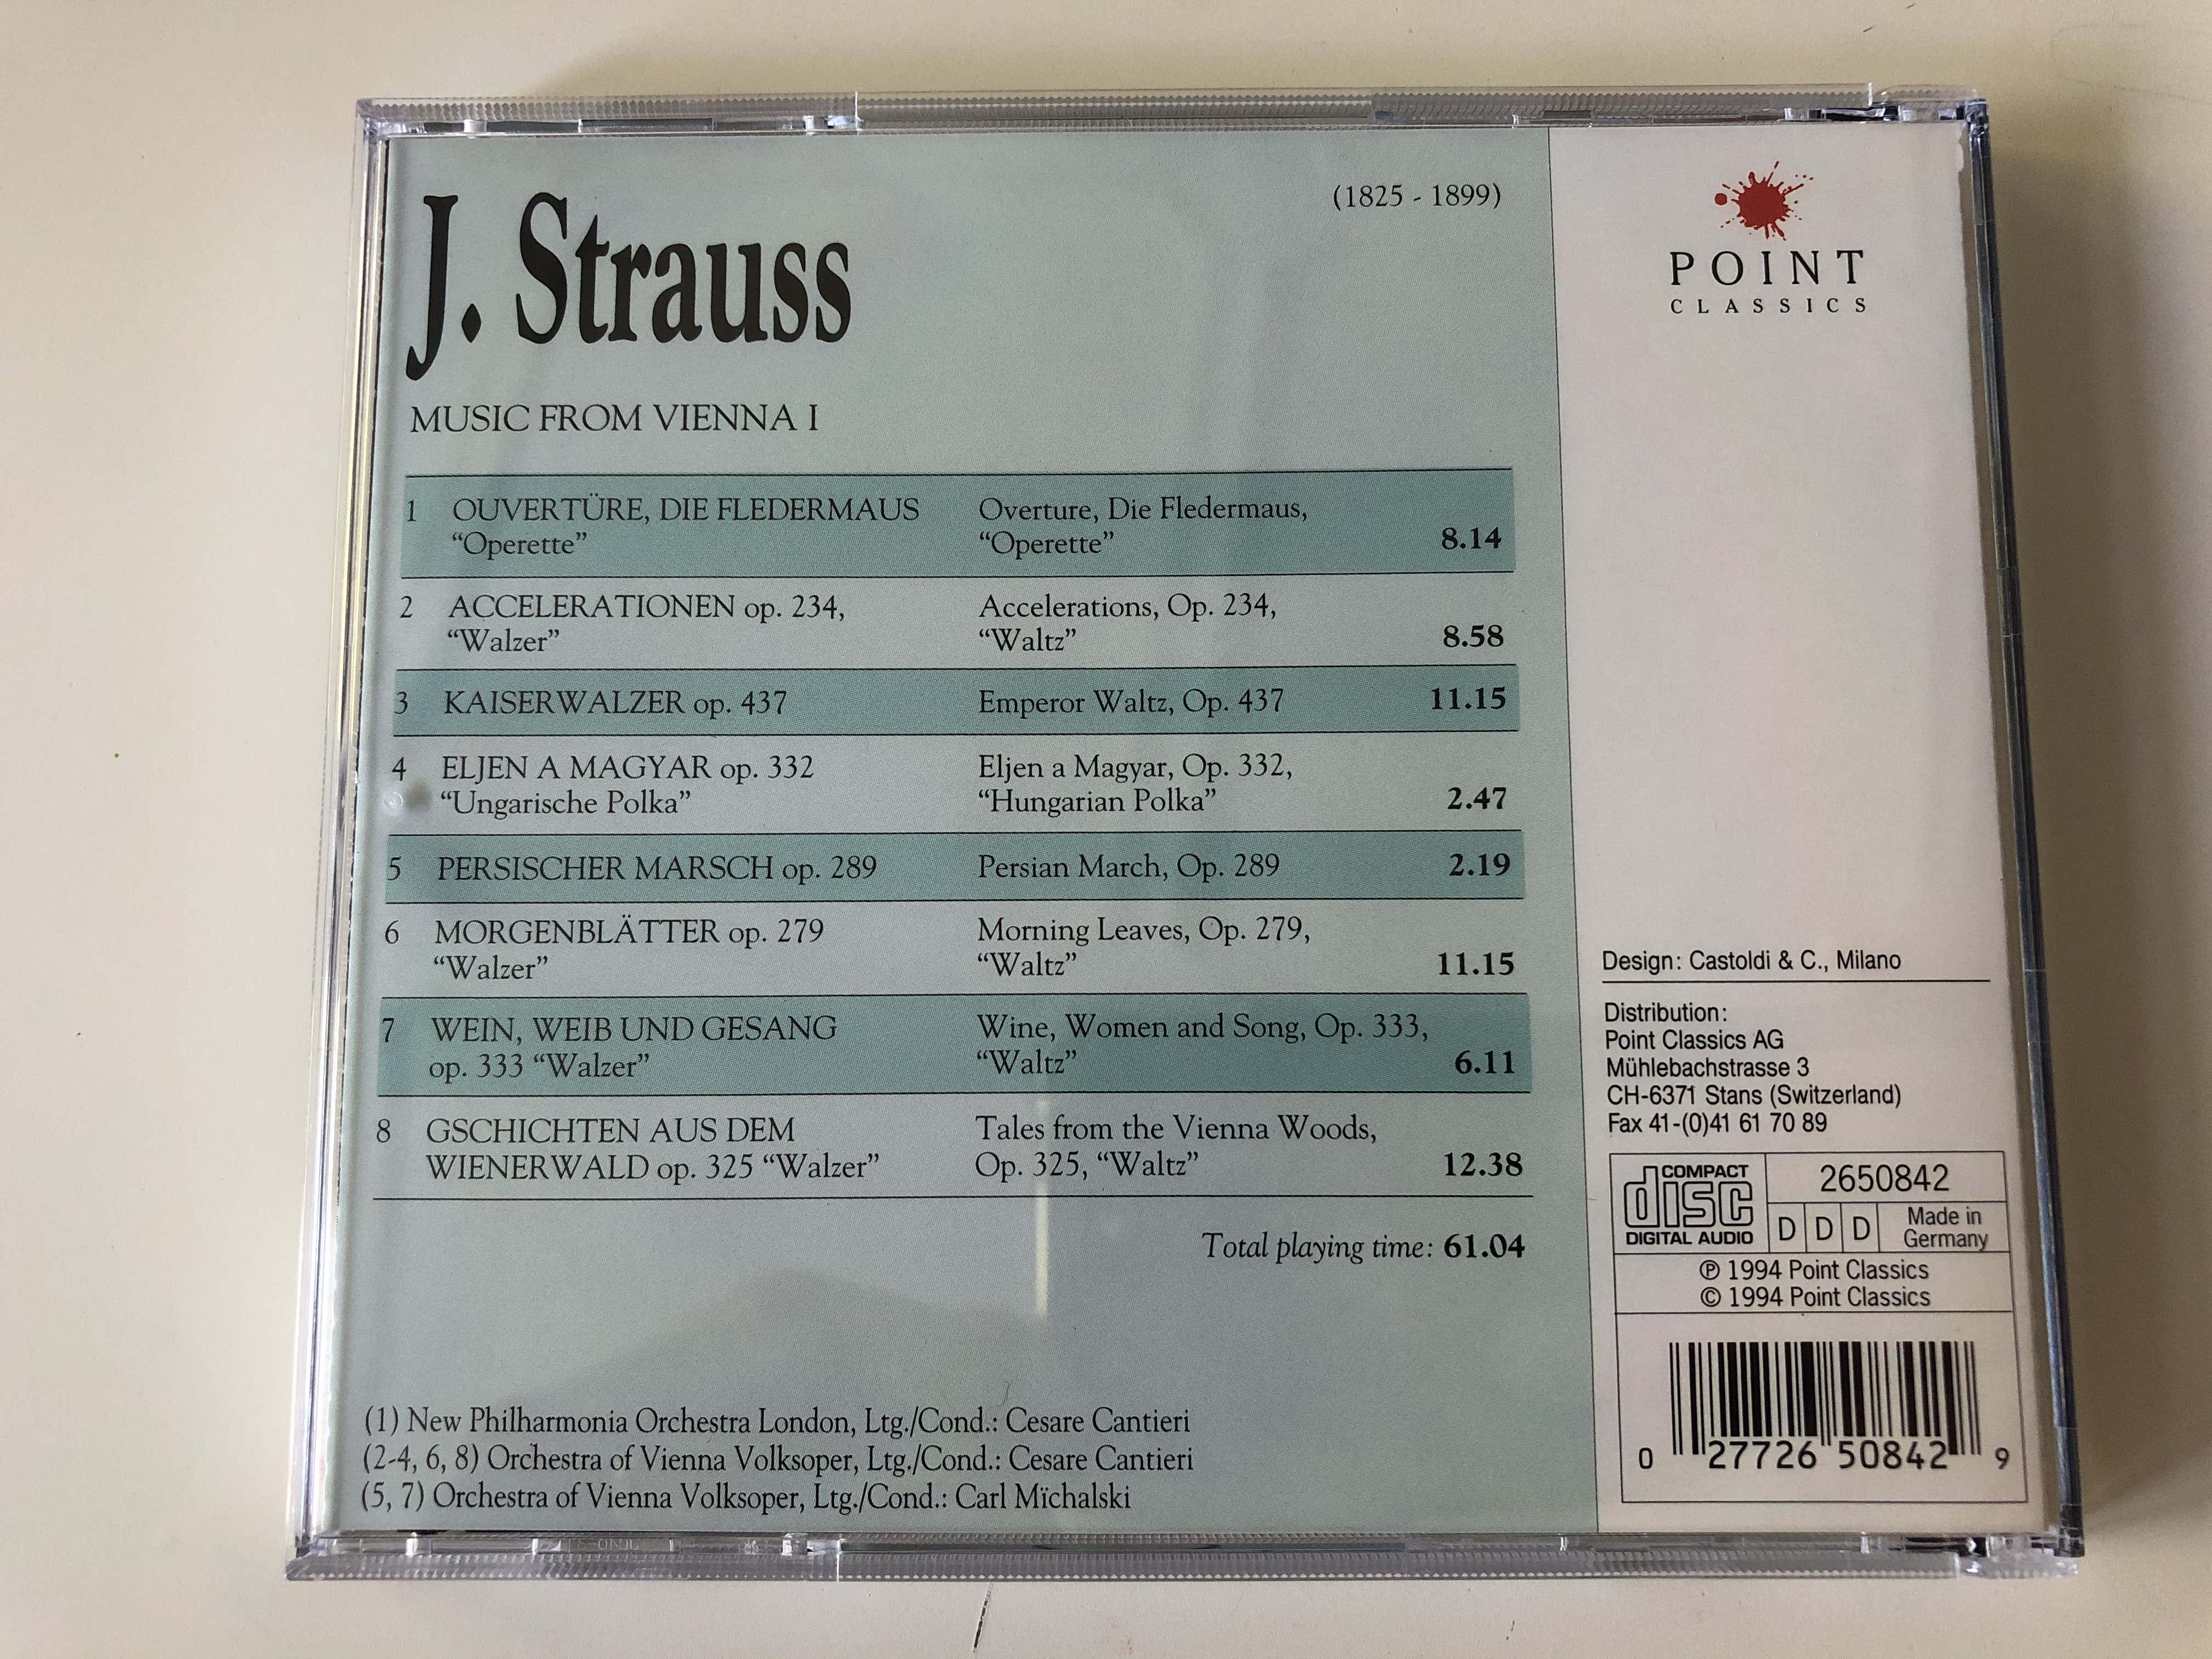 strauss-music-from-vienna-i-new-philharmonia-orchestra-london-cond.-cesare-cantieri-orchestra-of-vienna-volksoper-cond.-carl-michalski-point-classics-audio-cd-1994-2650842-5-.jpg